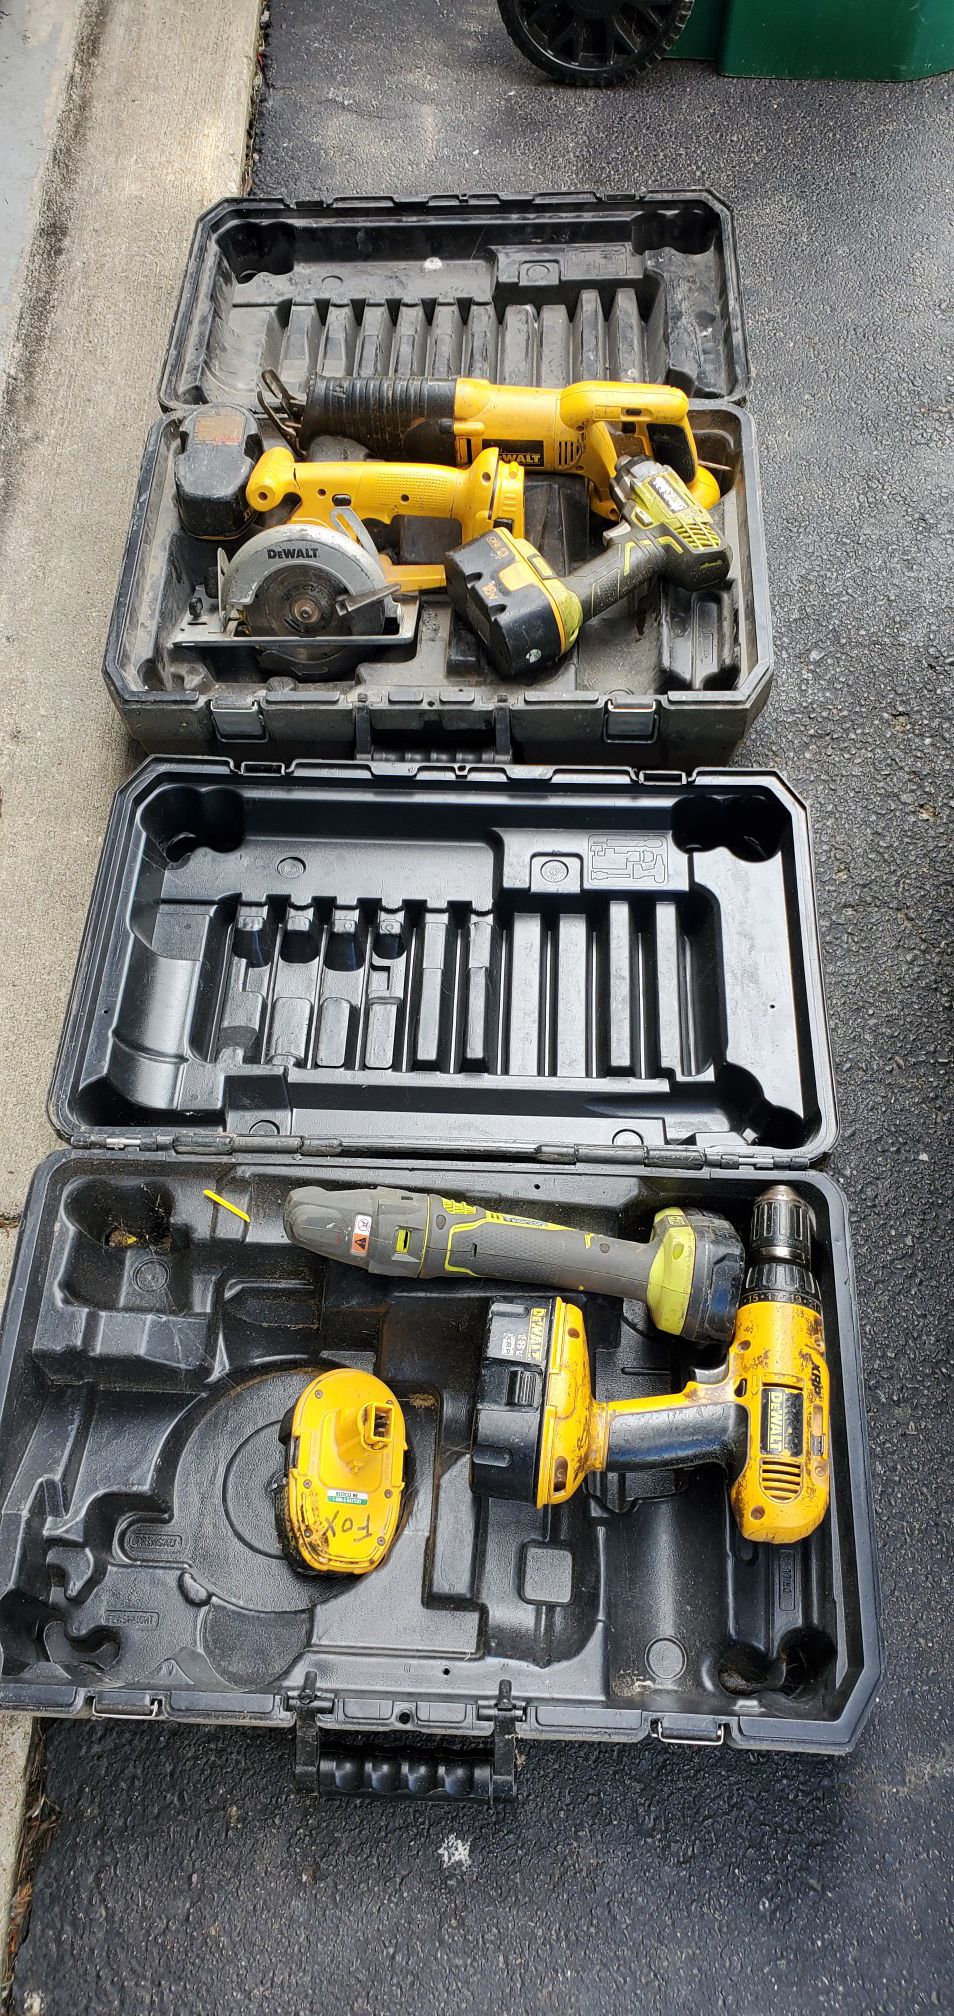 Dewalt and roybi power tools